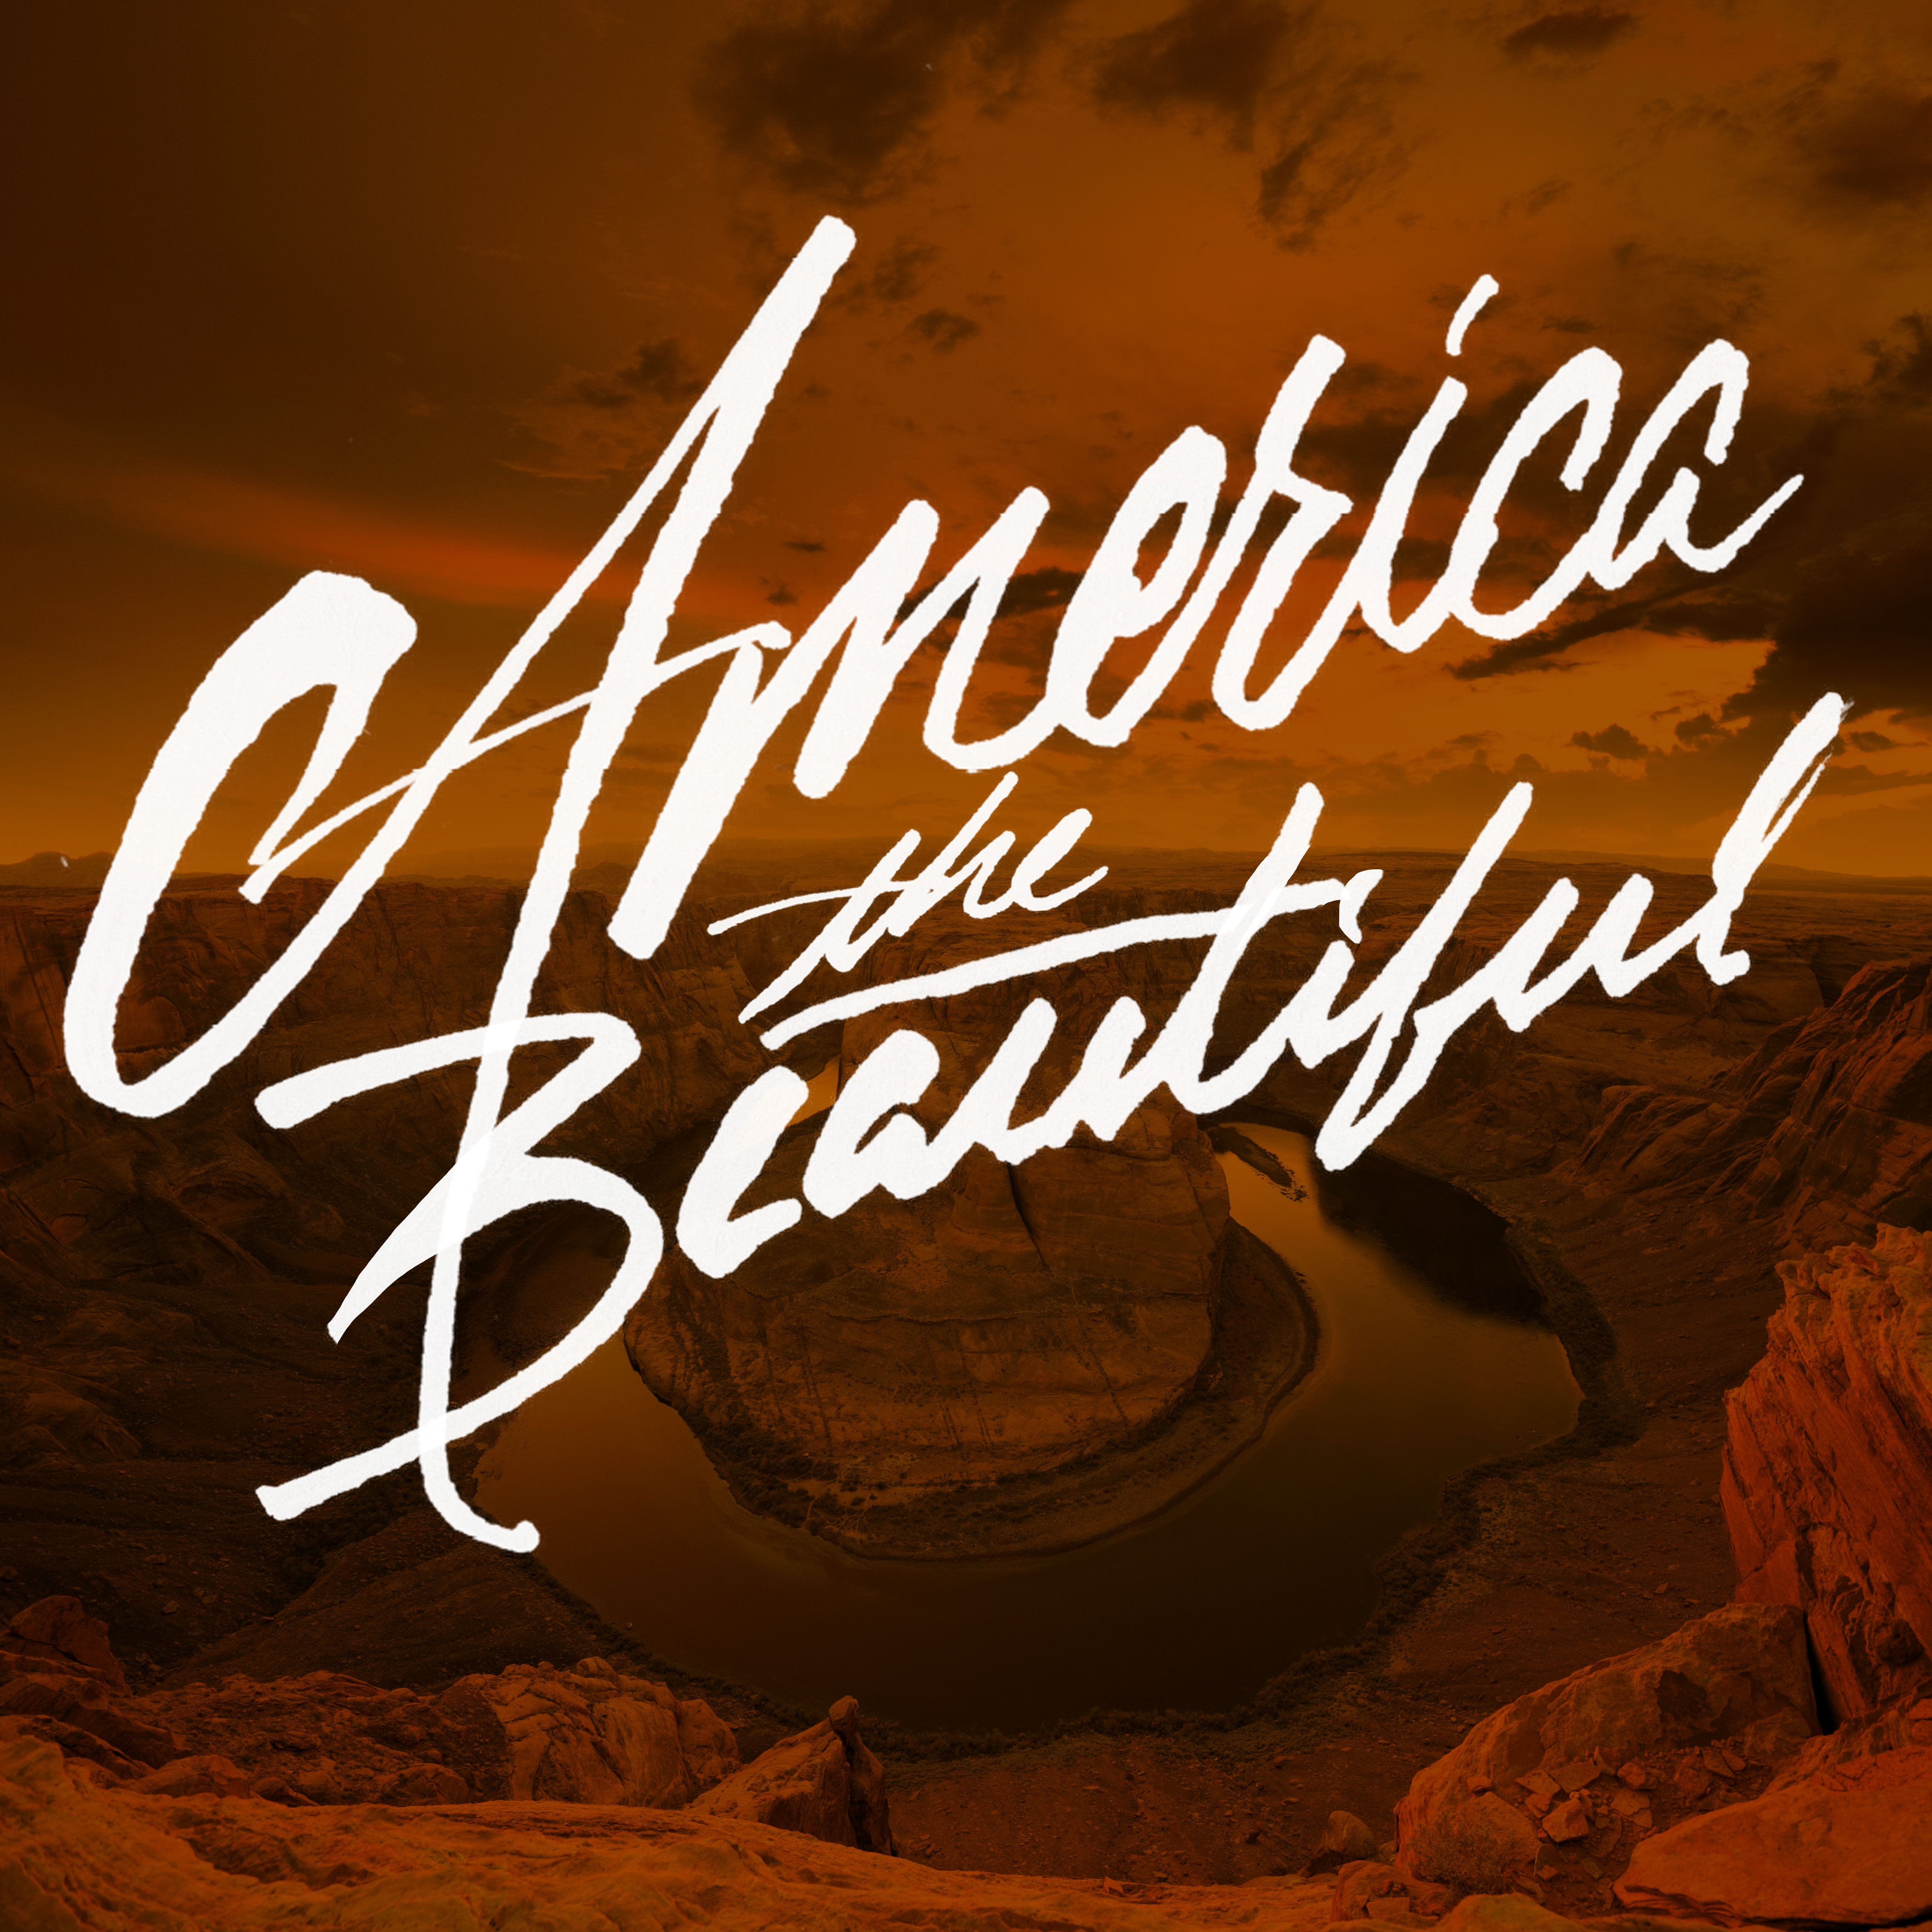 America - The Beautiful